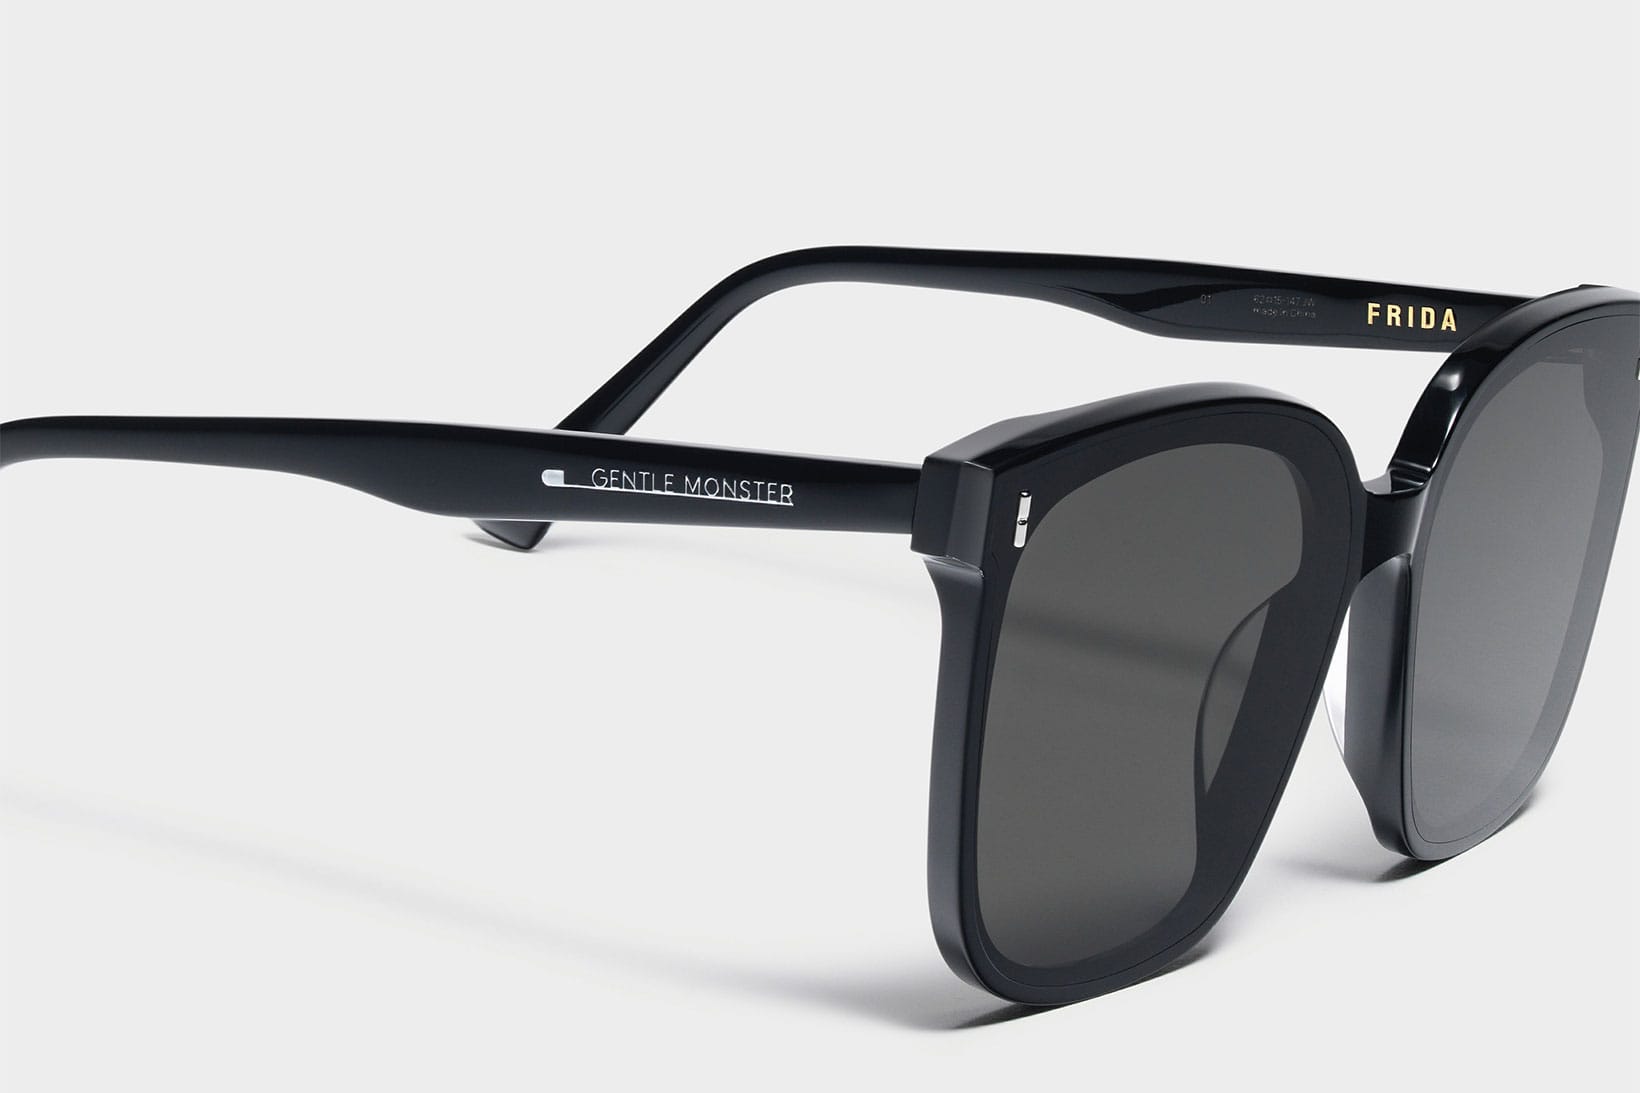 Accessories Sunglasses & Eyewear Sunglasses Rick 01-2021 Gentle monster Sunglasses 